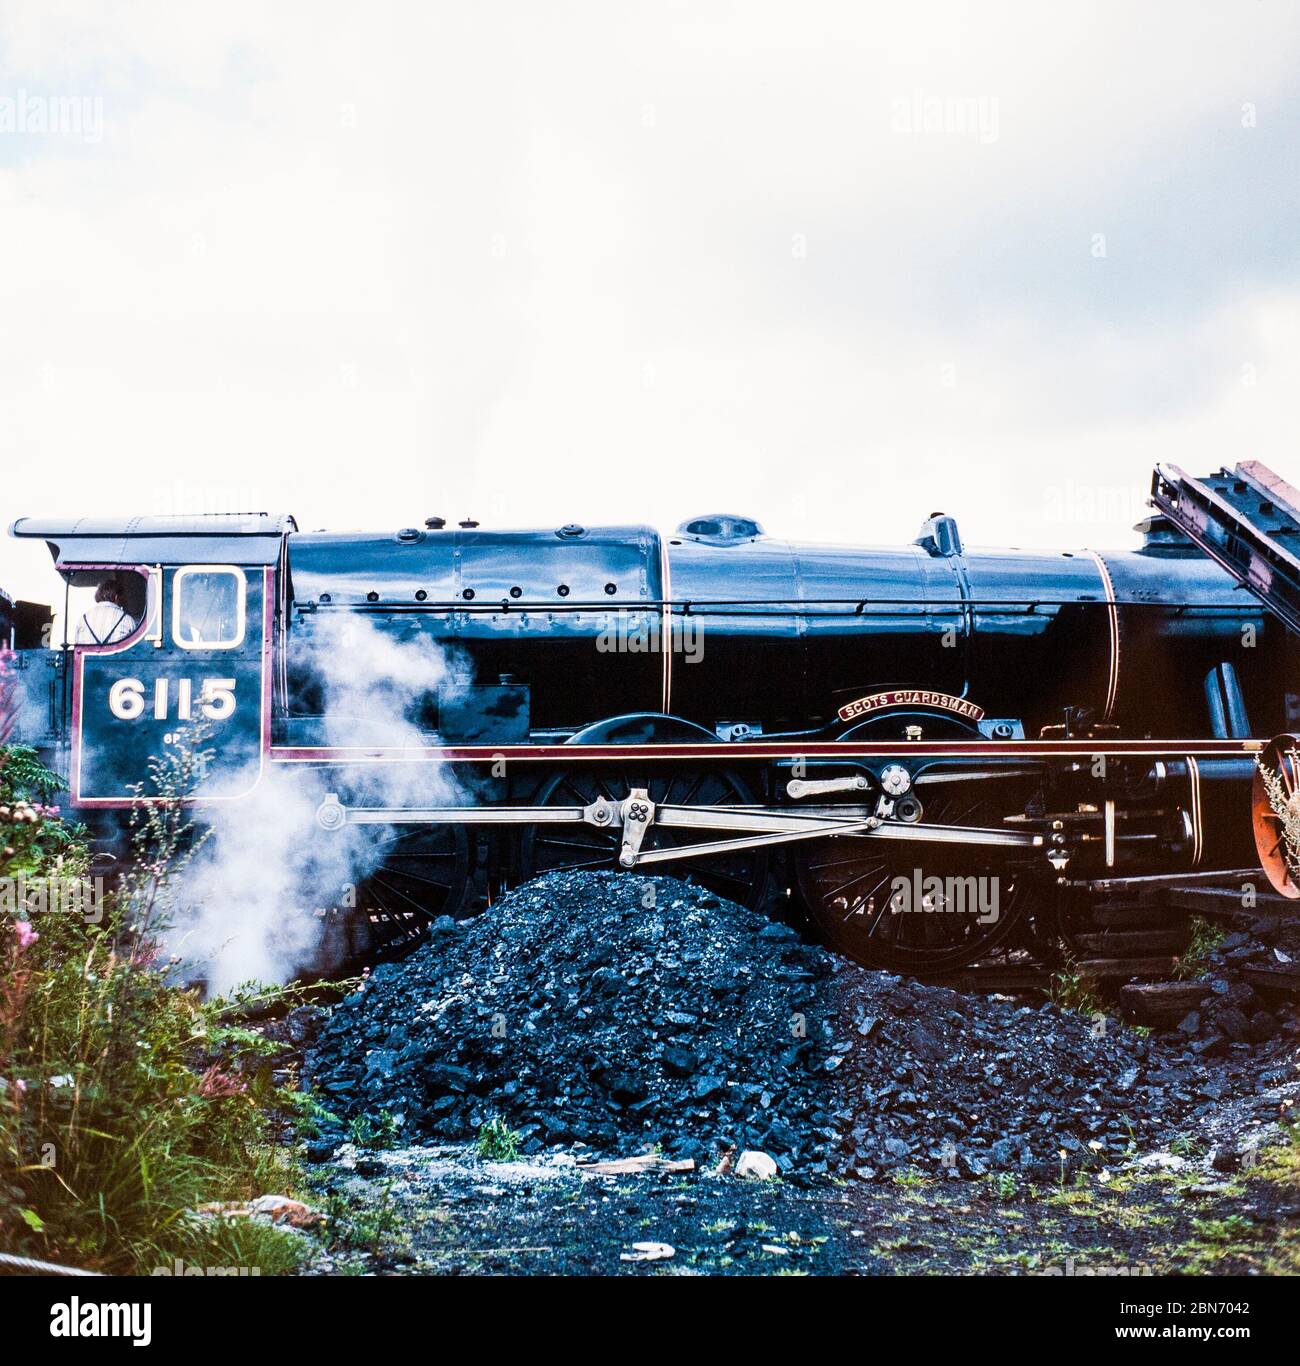 The Scots Guardsman Steam Locomotive 6115 fueling up, England, UK. Stock Photo